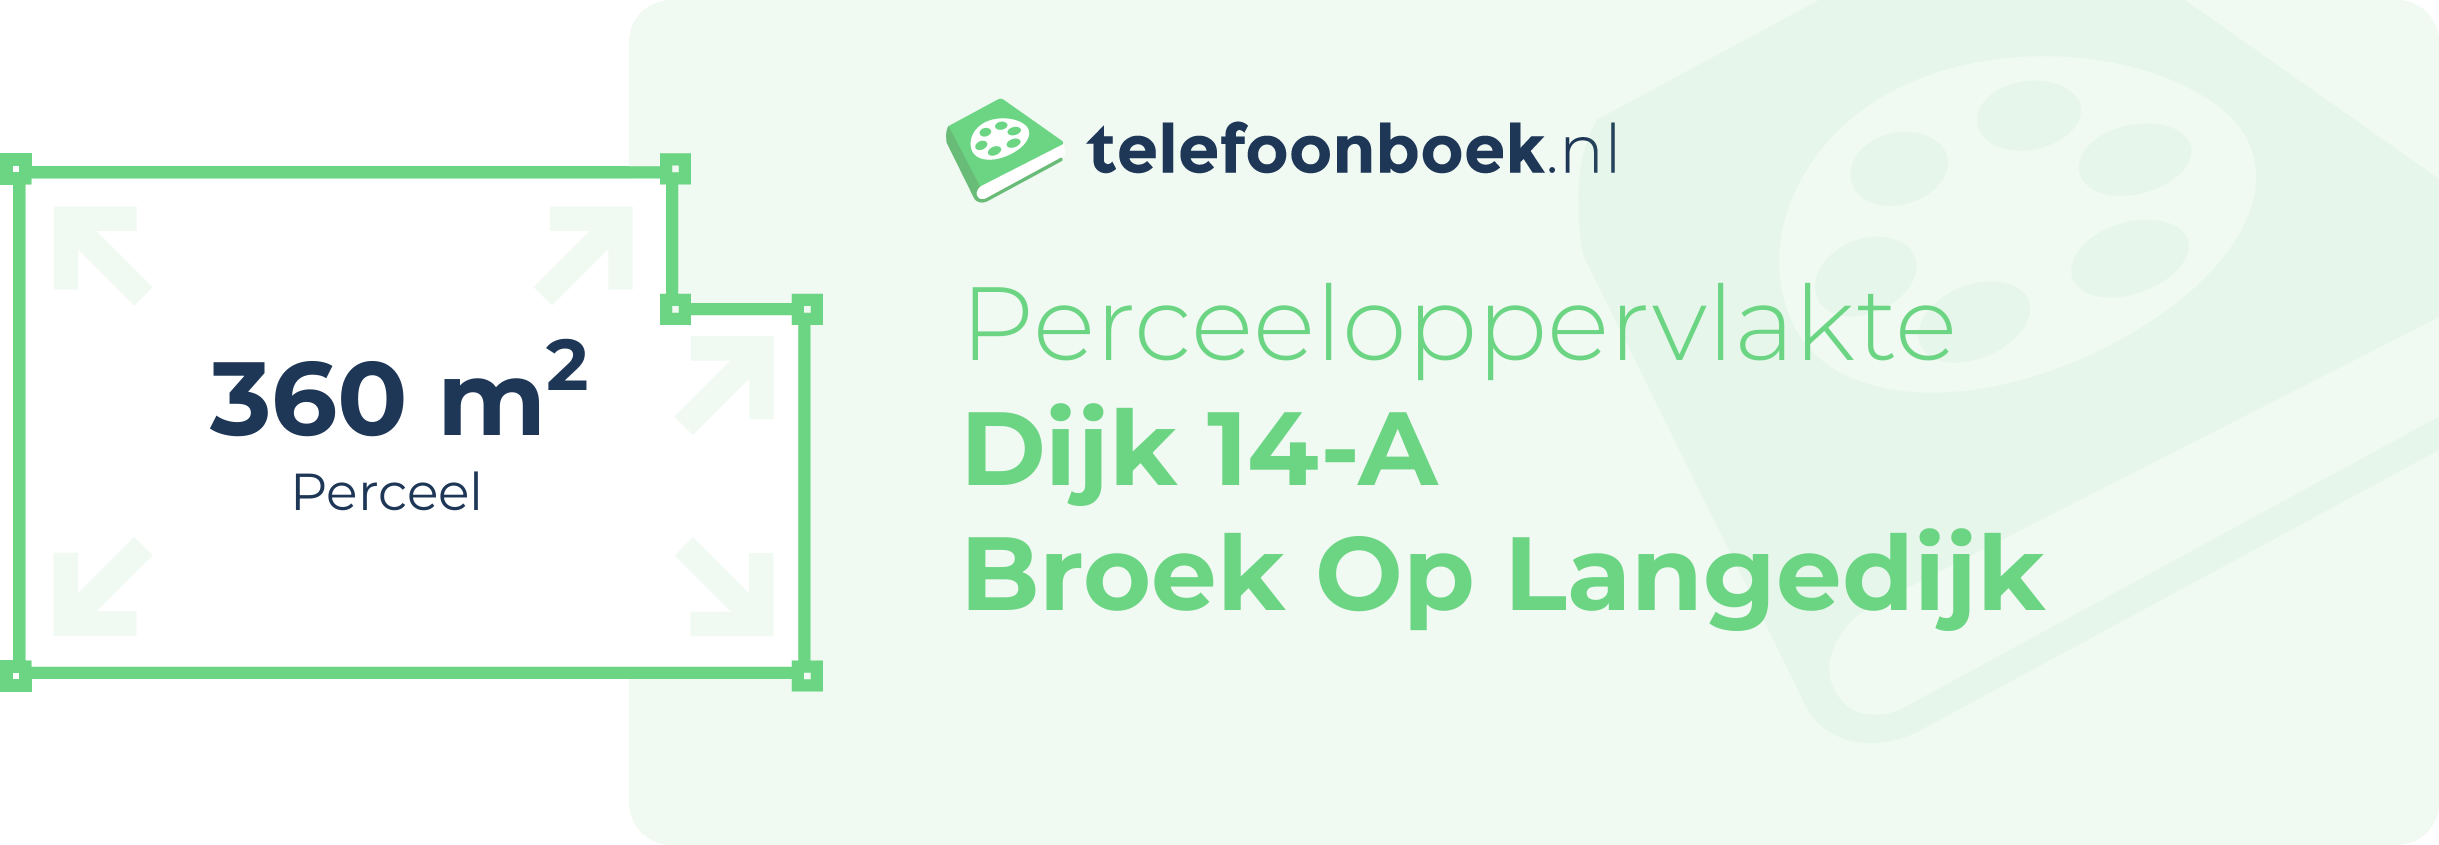 Perceeloppervlakte Dijk 14-A Broek Op Langedijk